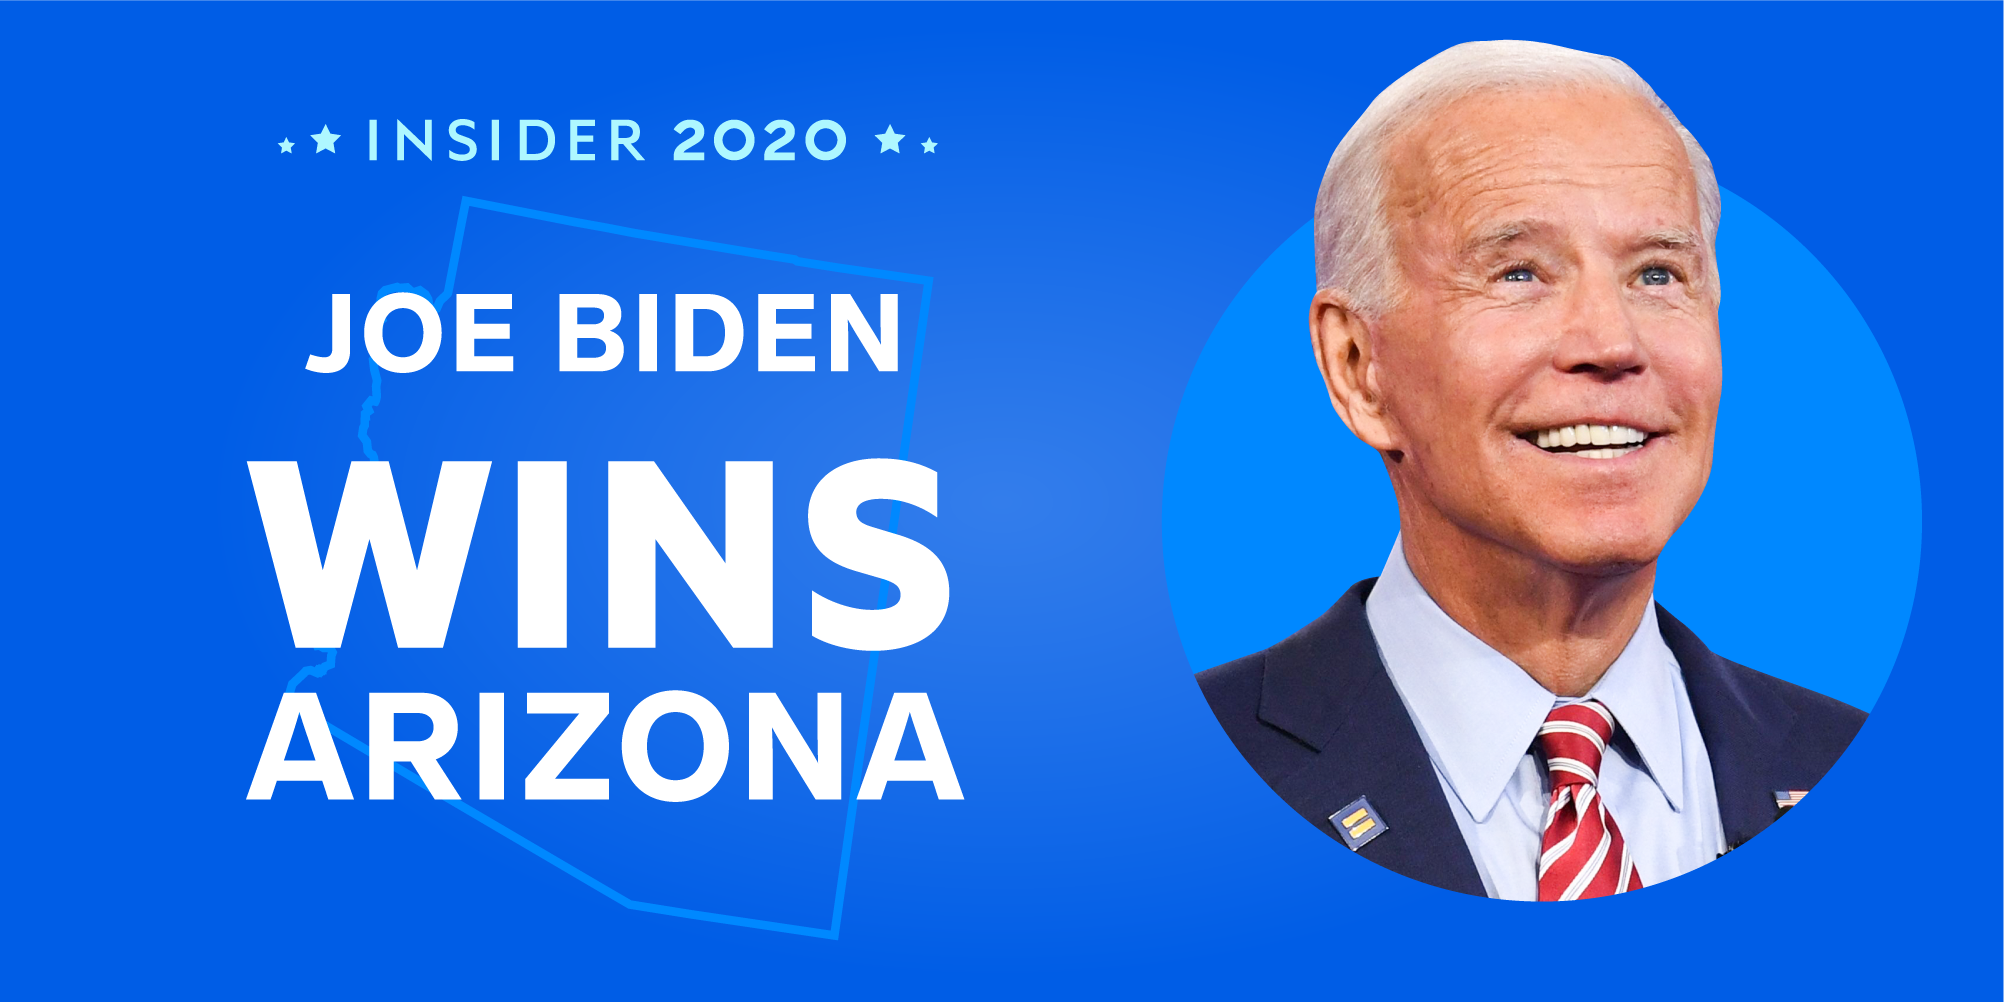 Biden wins the Arizona Democratic primary in his third major victory of